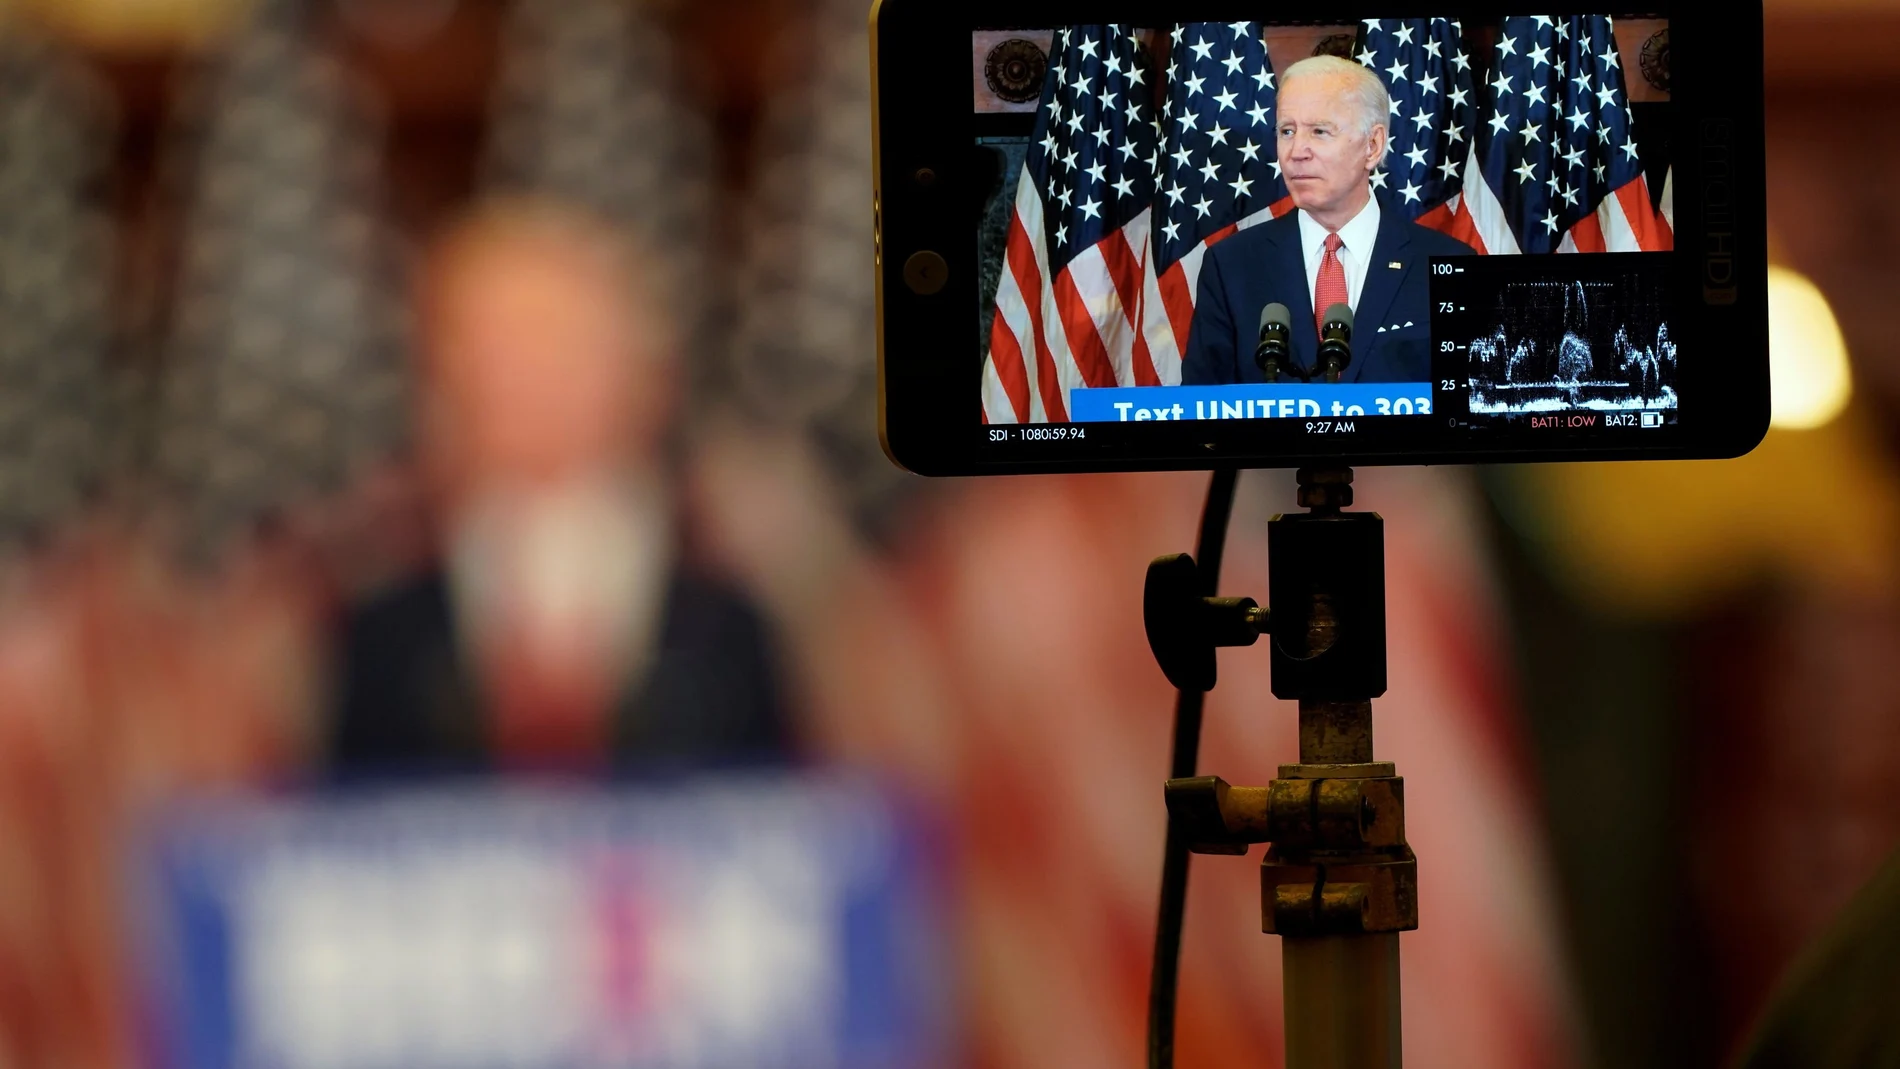 Democratic U.S. presidential candidate Joe Biden speaks at event in Philadelphia